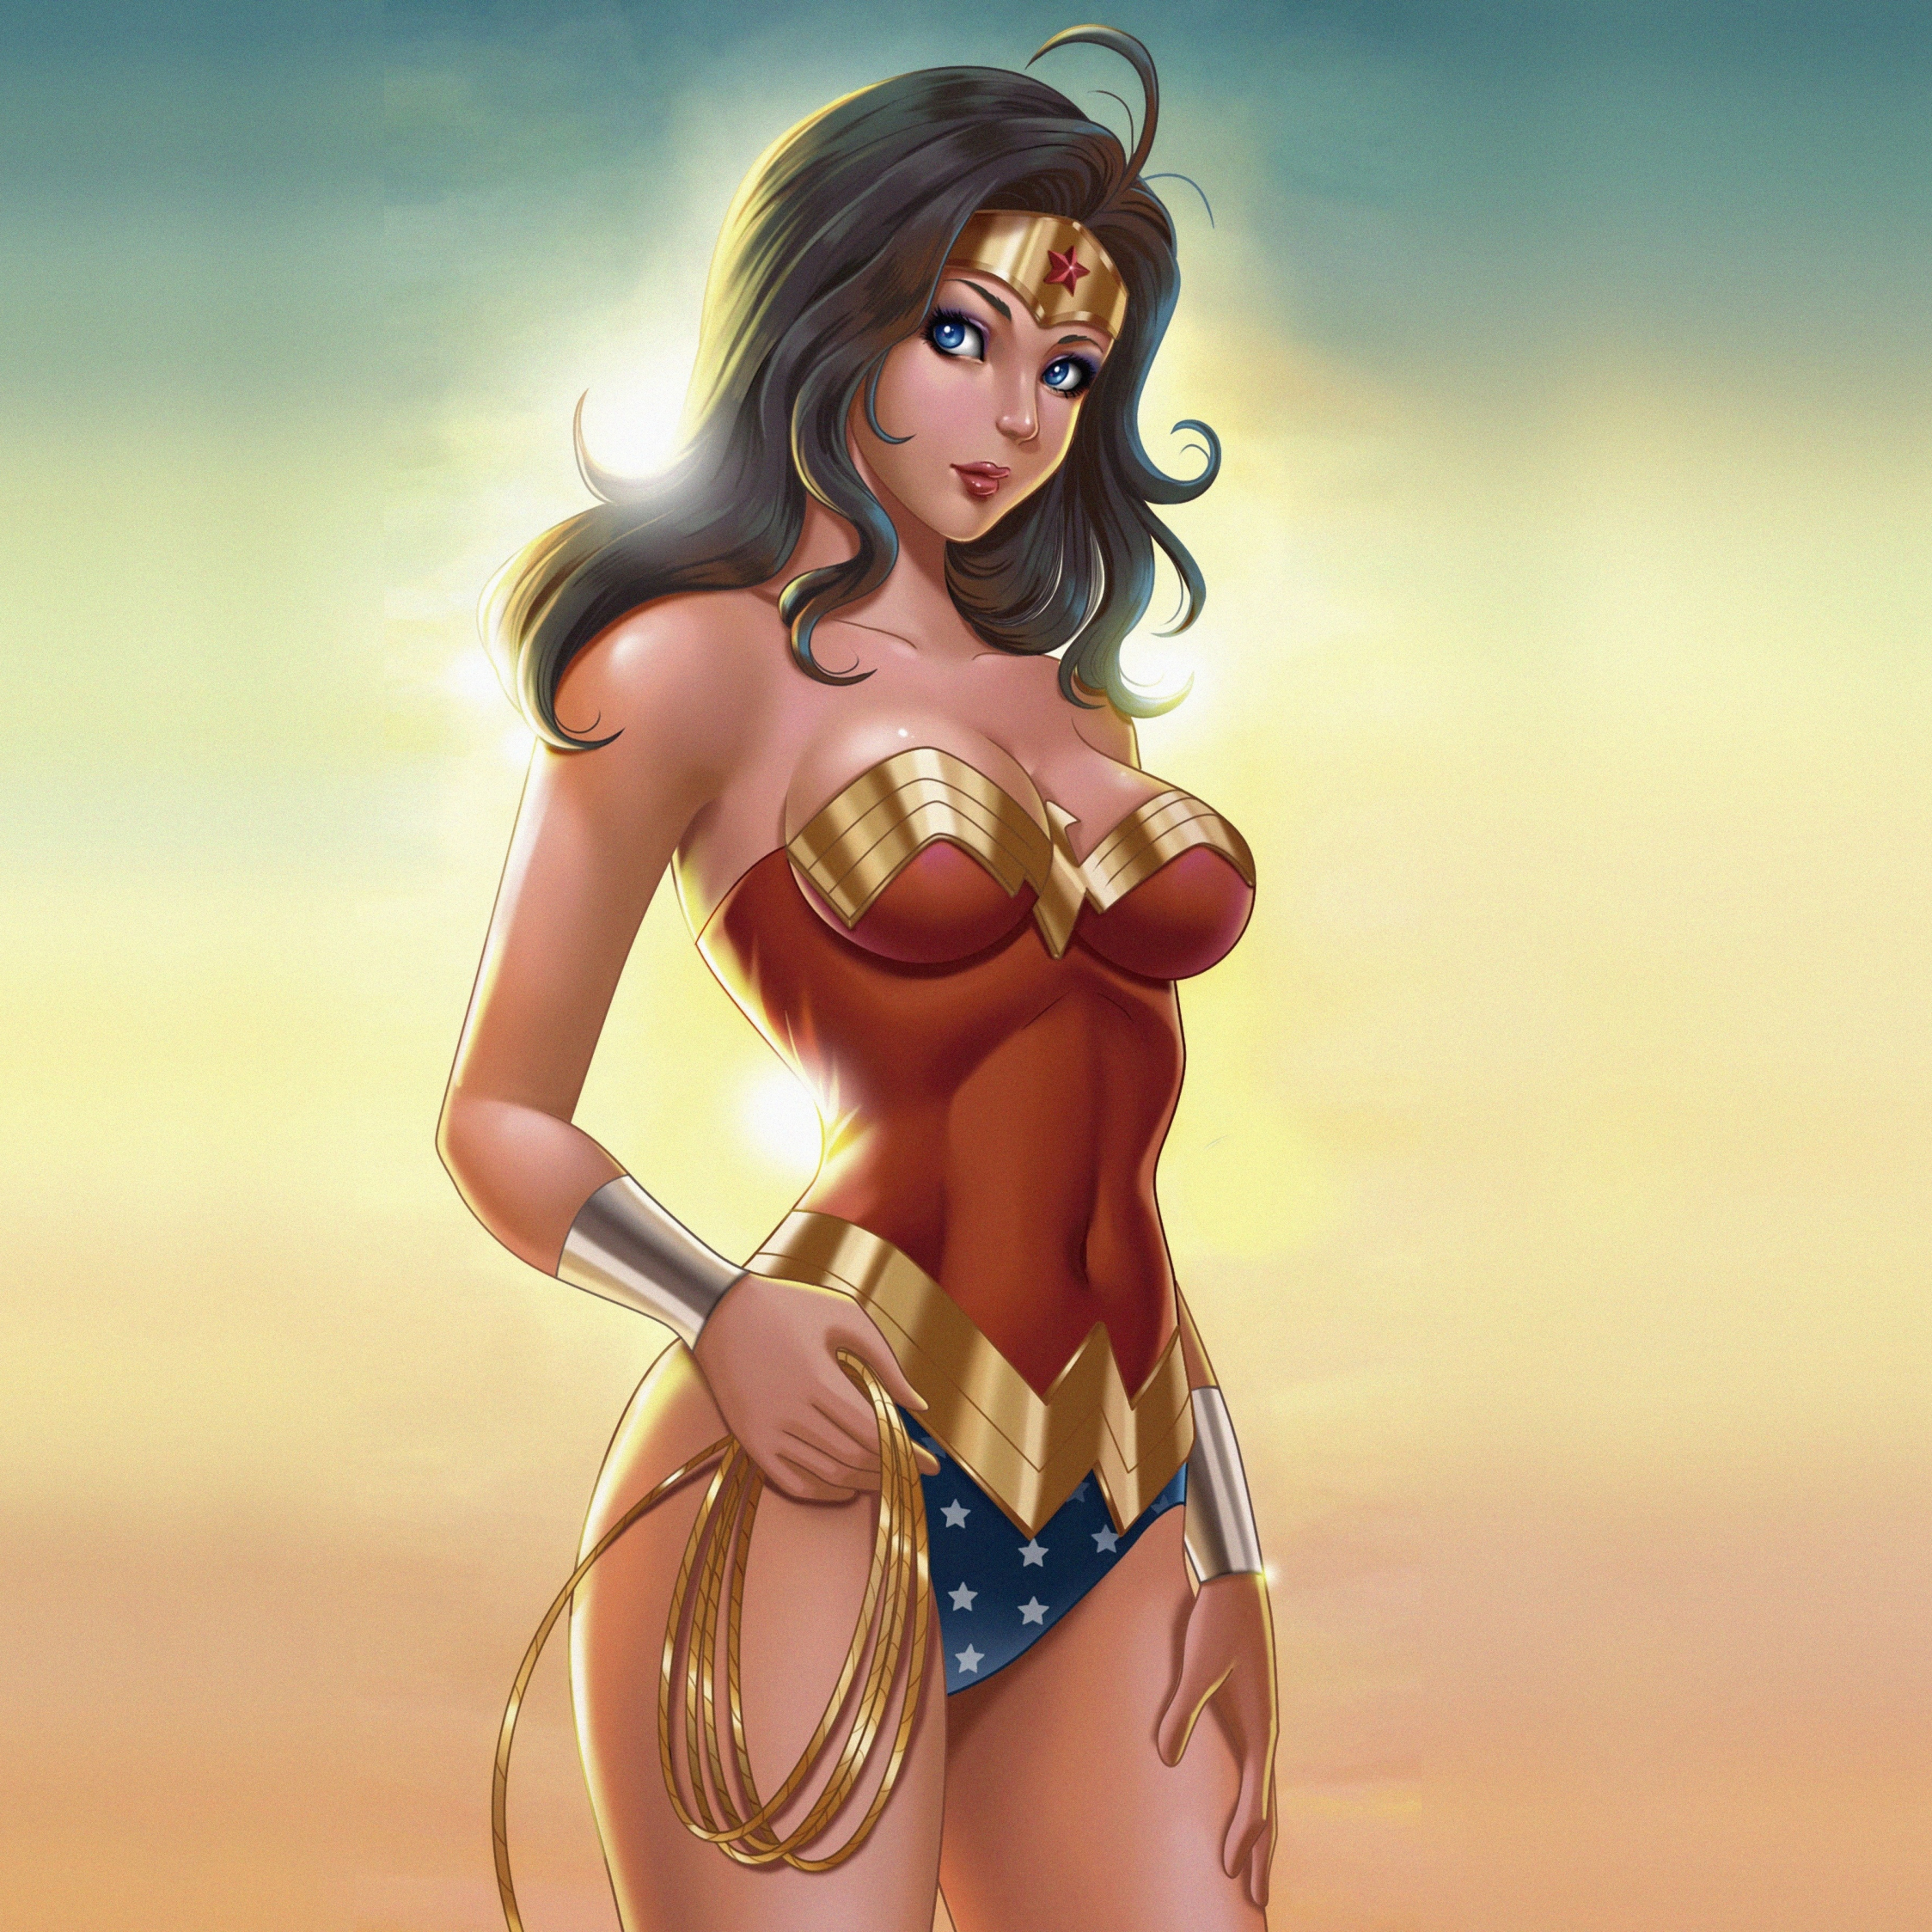 Cute and beautiful, Wonder Woman, Princess Dianna, 2248x2248 wallpaper.